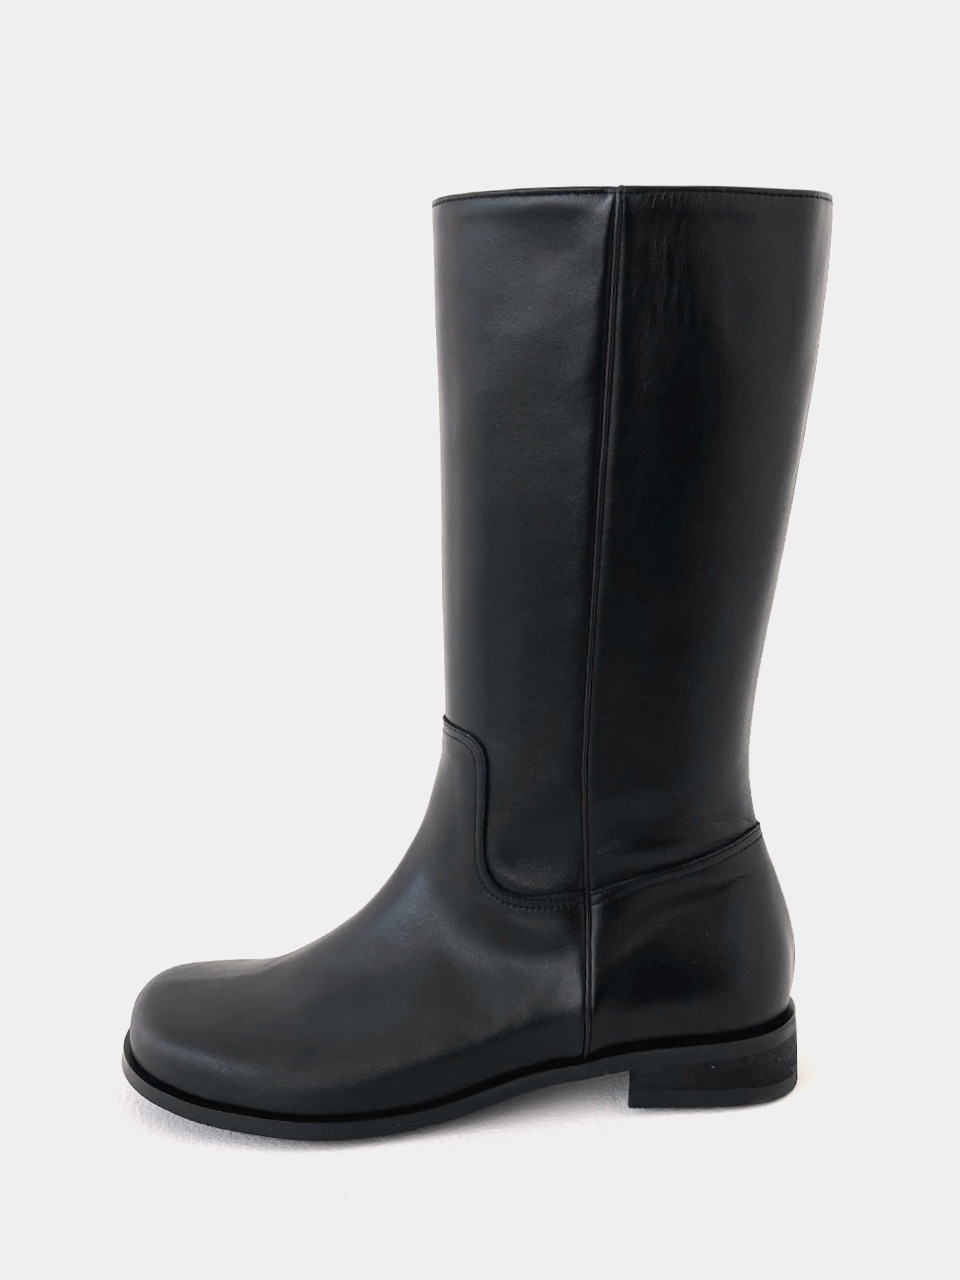 Mrc093 Diagonal Zipper Long Boots (Black)